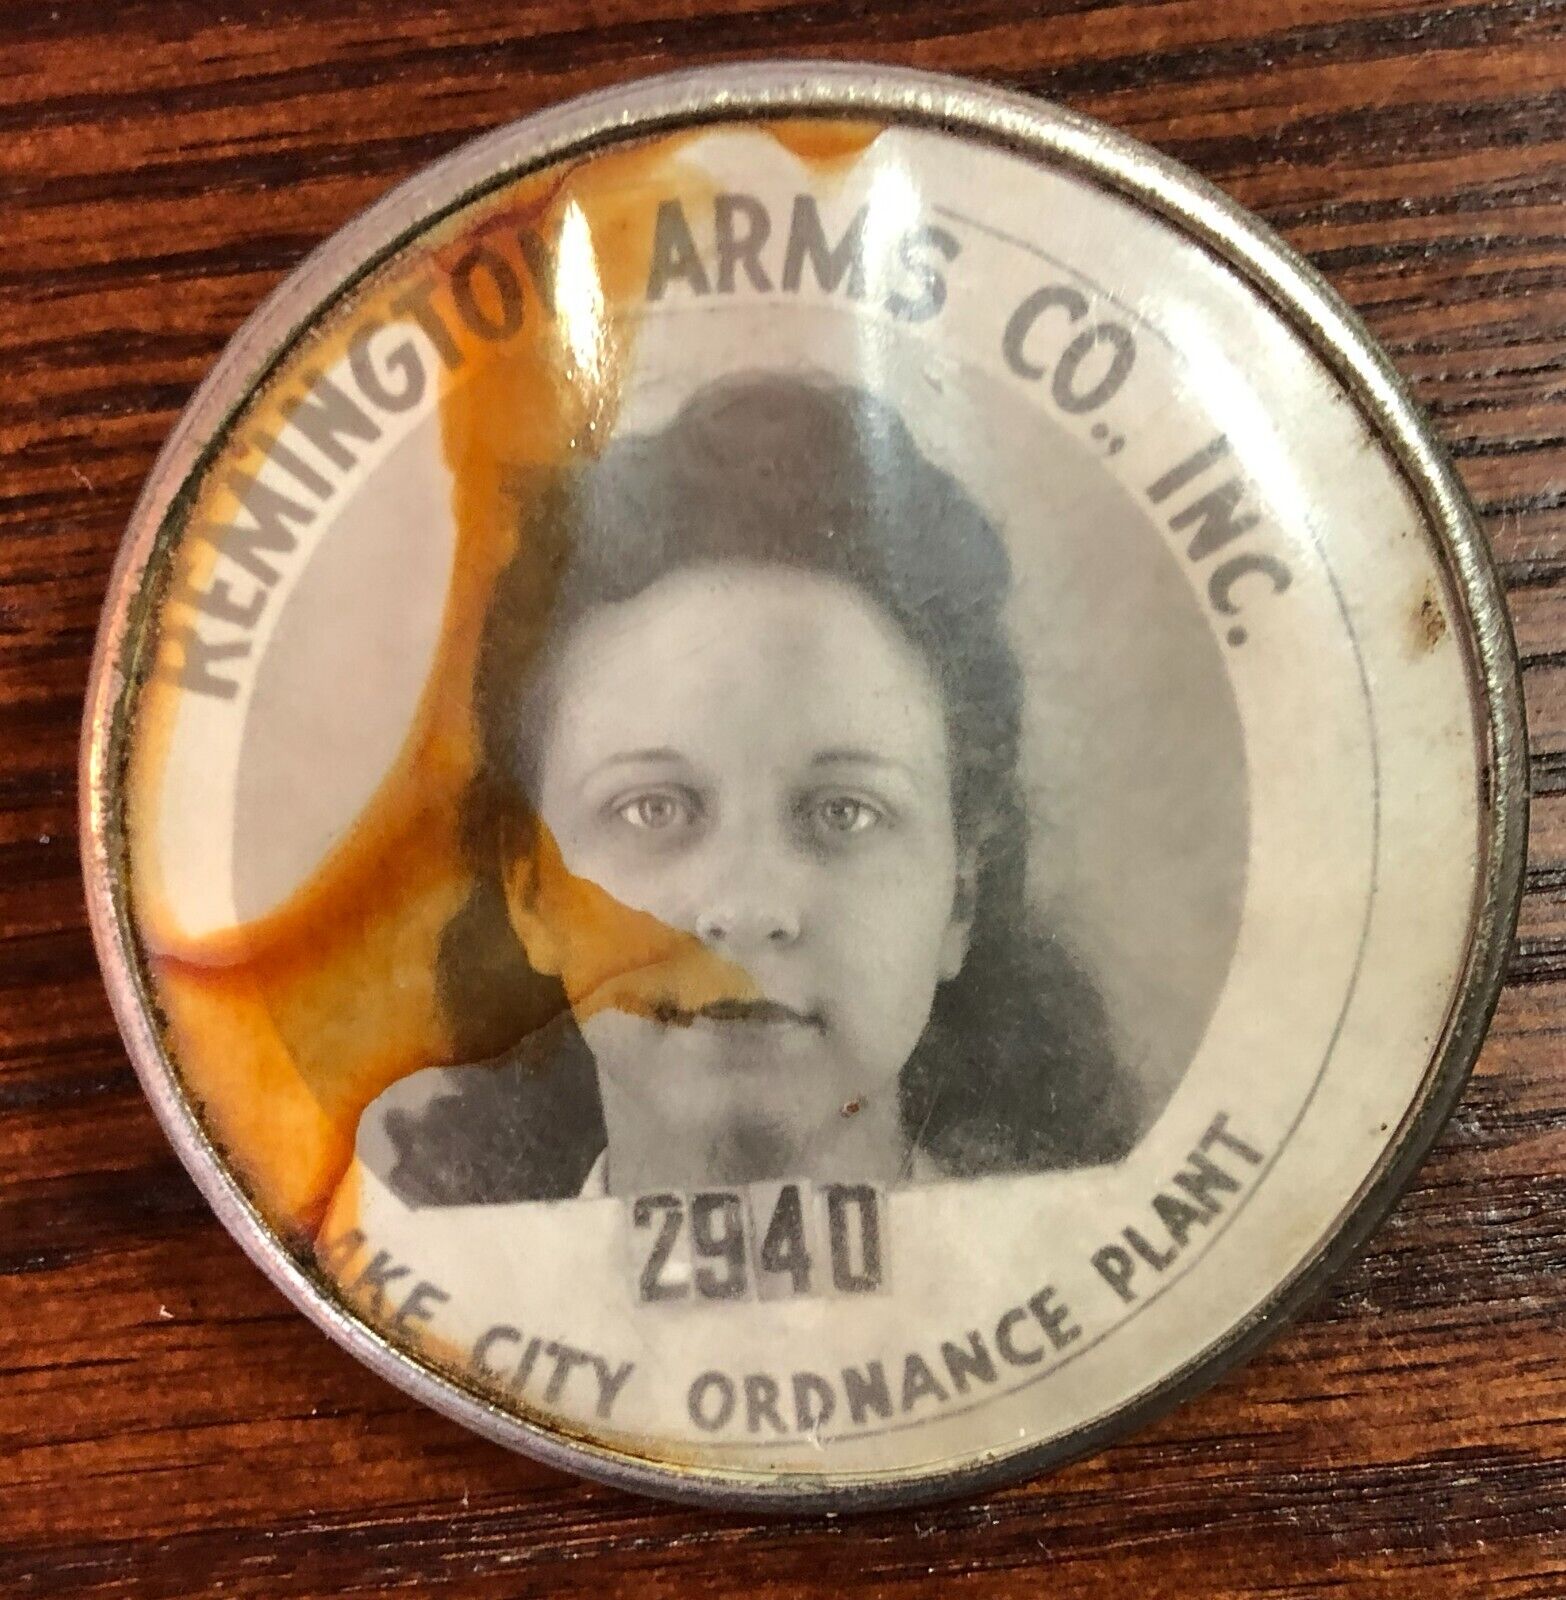 Remington Arms WWII woman's employee ID badge; Lake City, MO Ordnance Plant